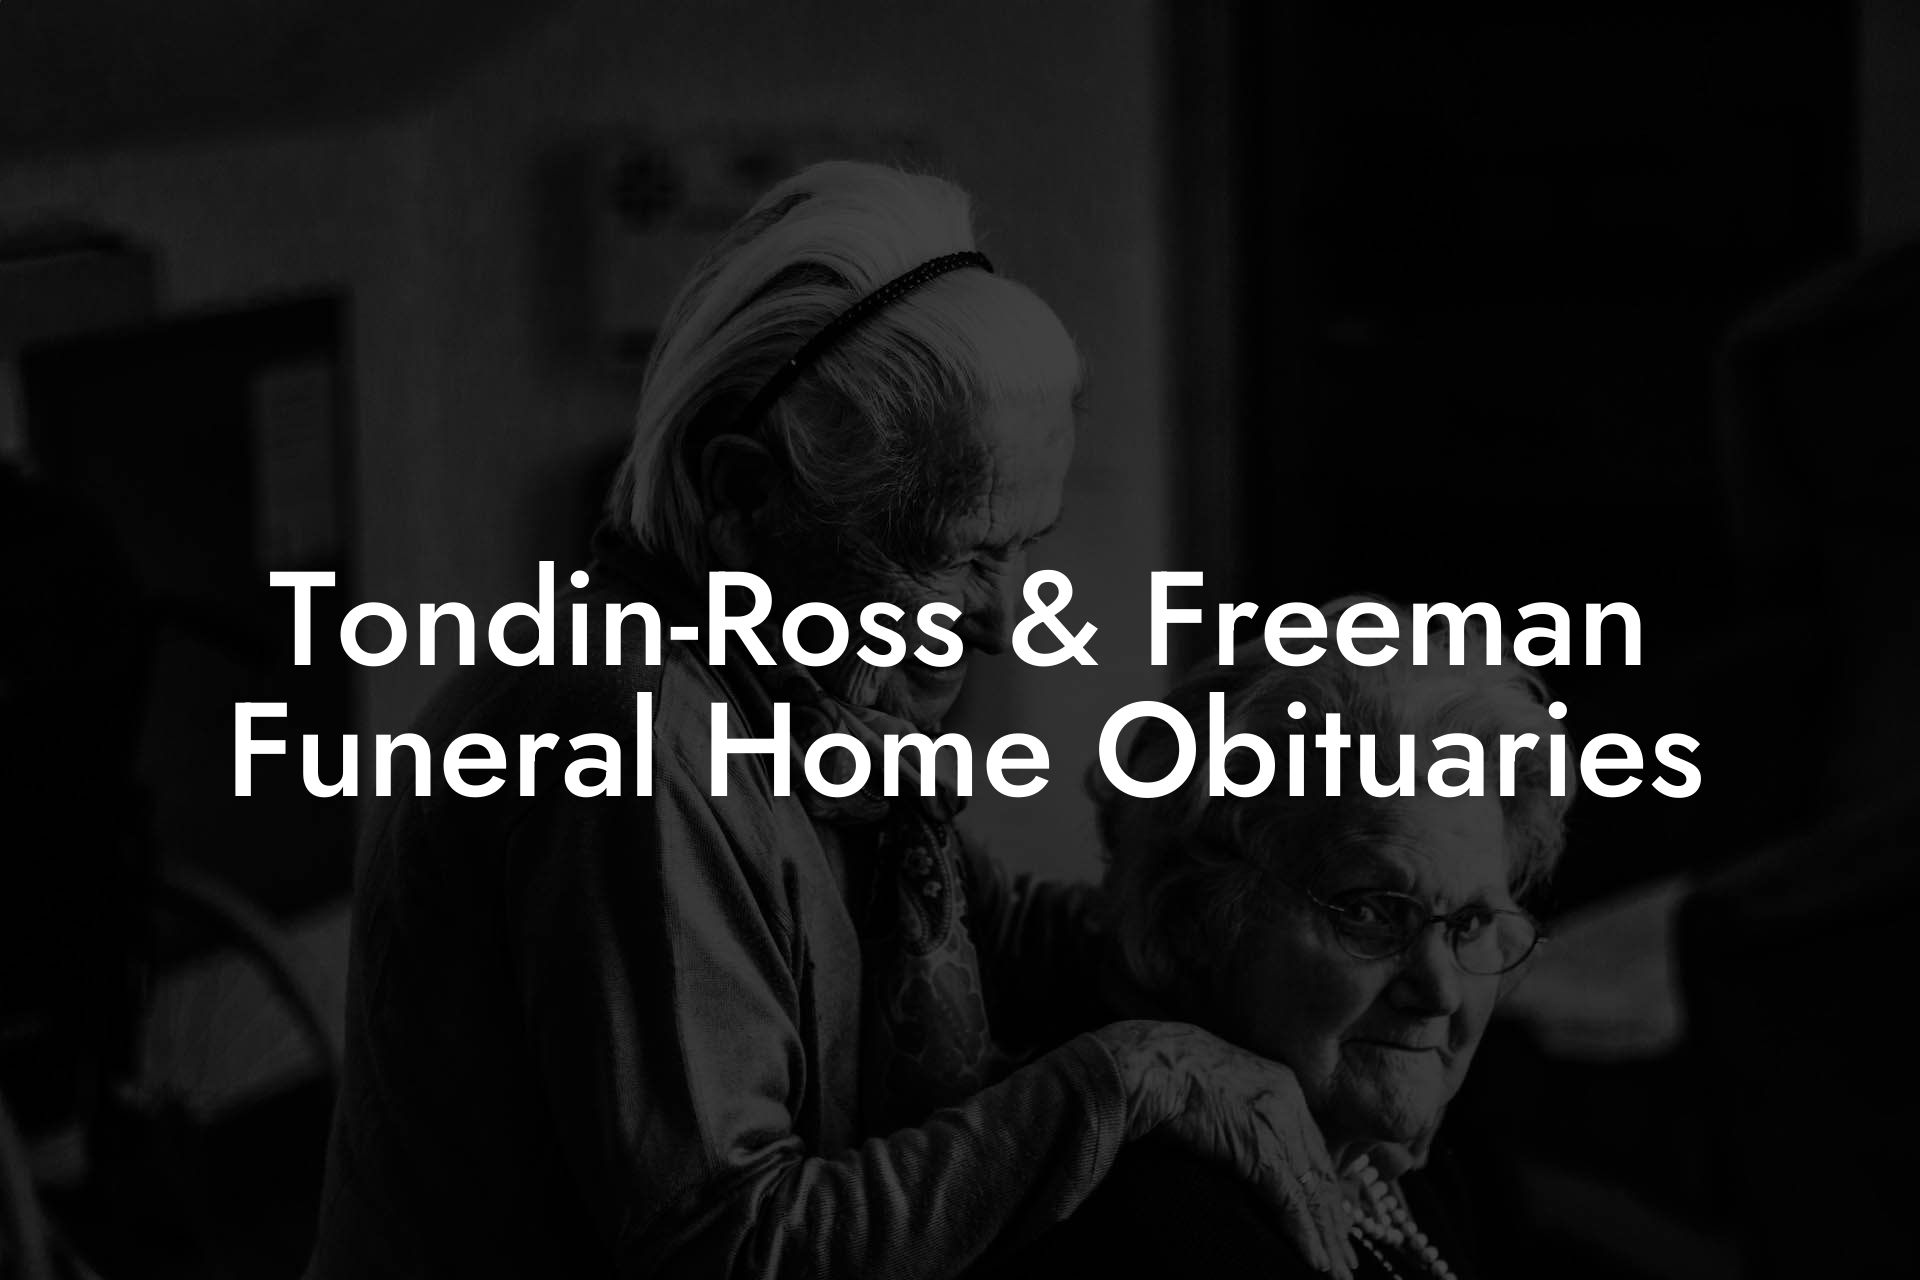 Tondin-Ross & Freeman Funeral Home Obituaries